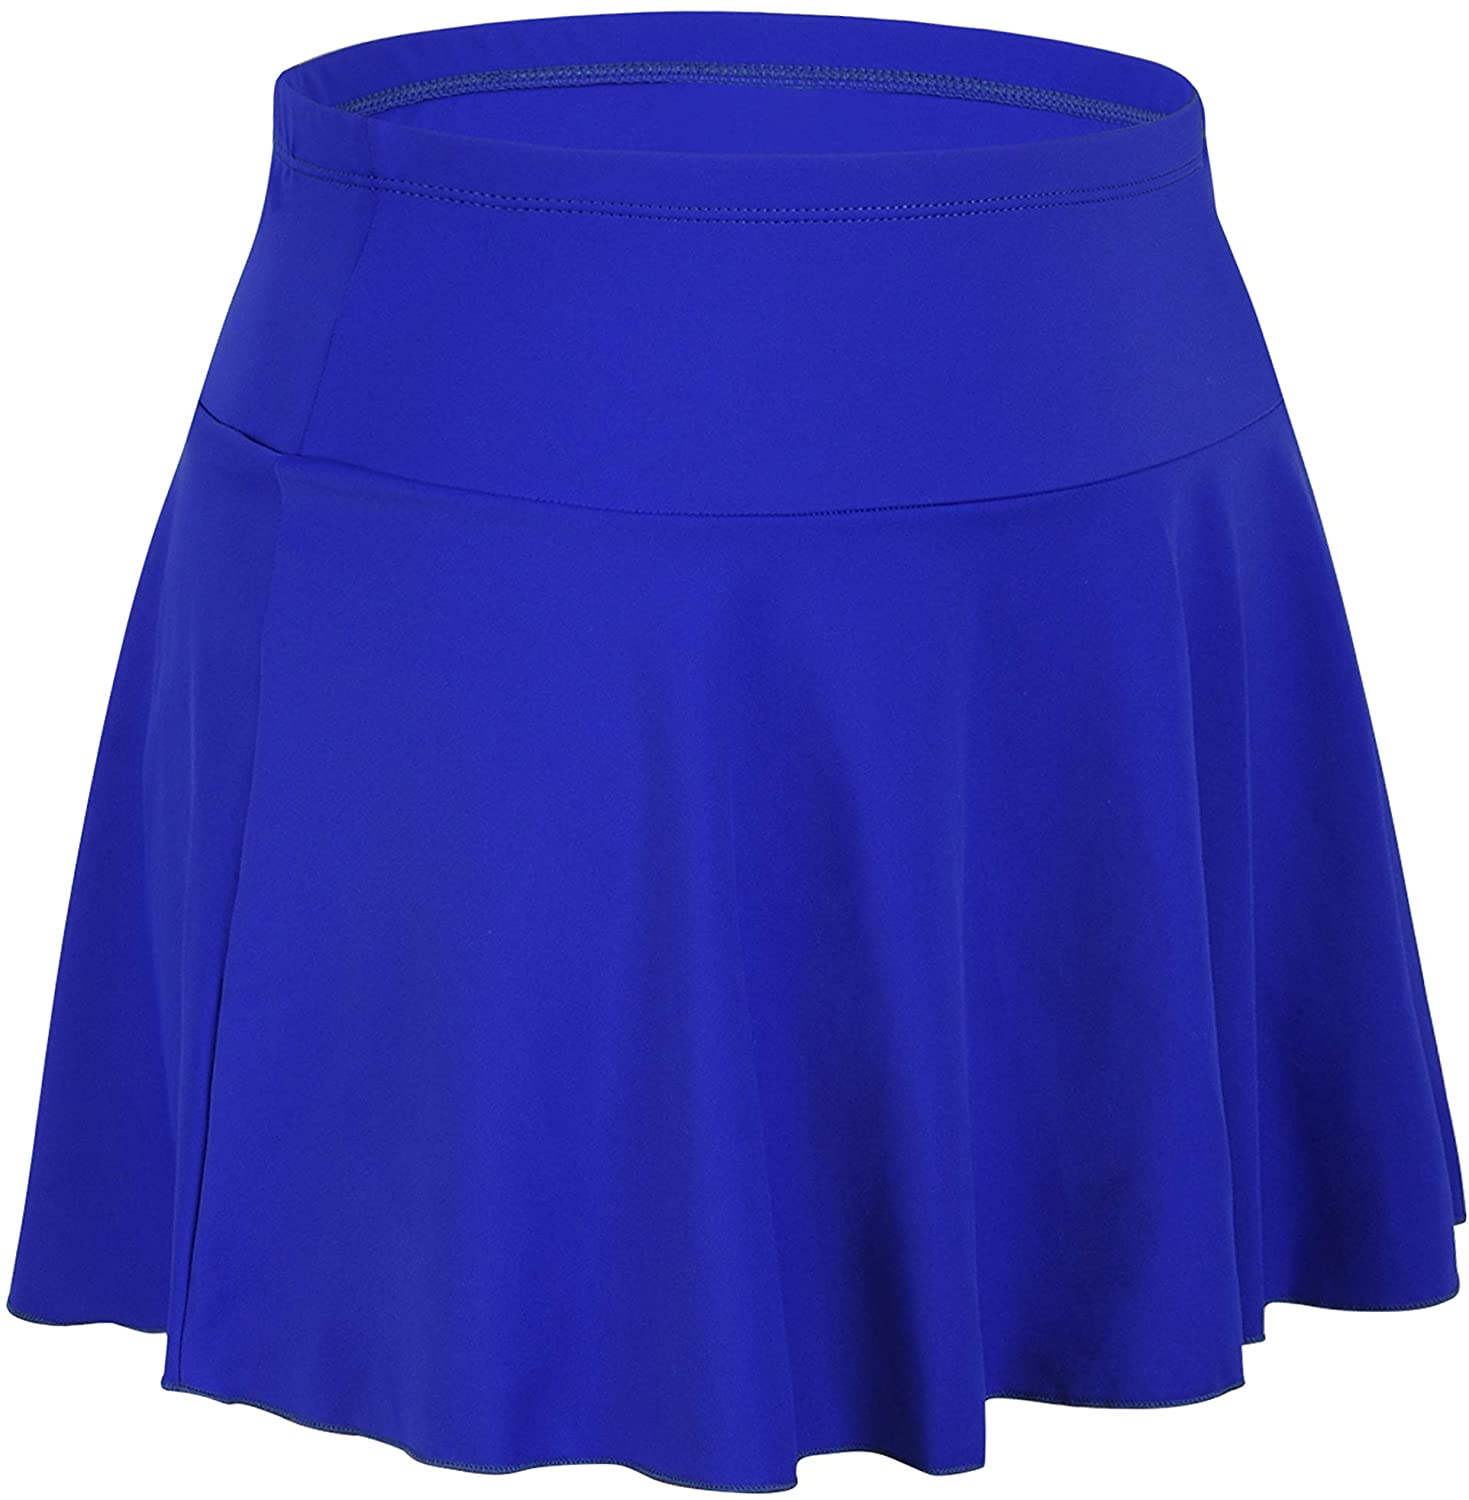 Septangle Women's High Waist Swim Skirt Tummy Control, Royal Blue, Size ...